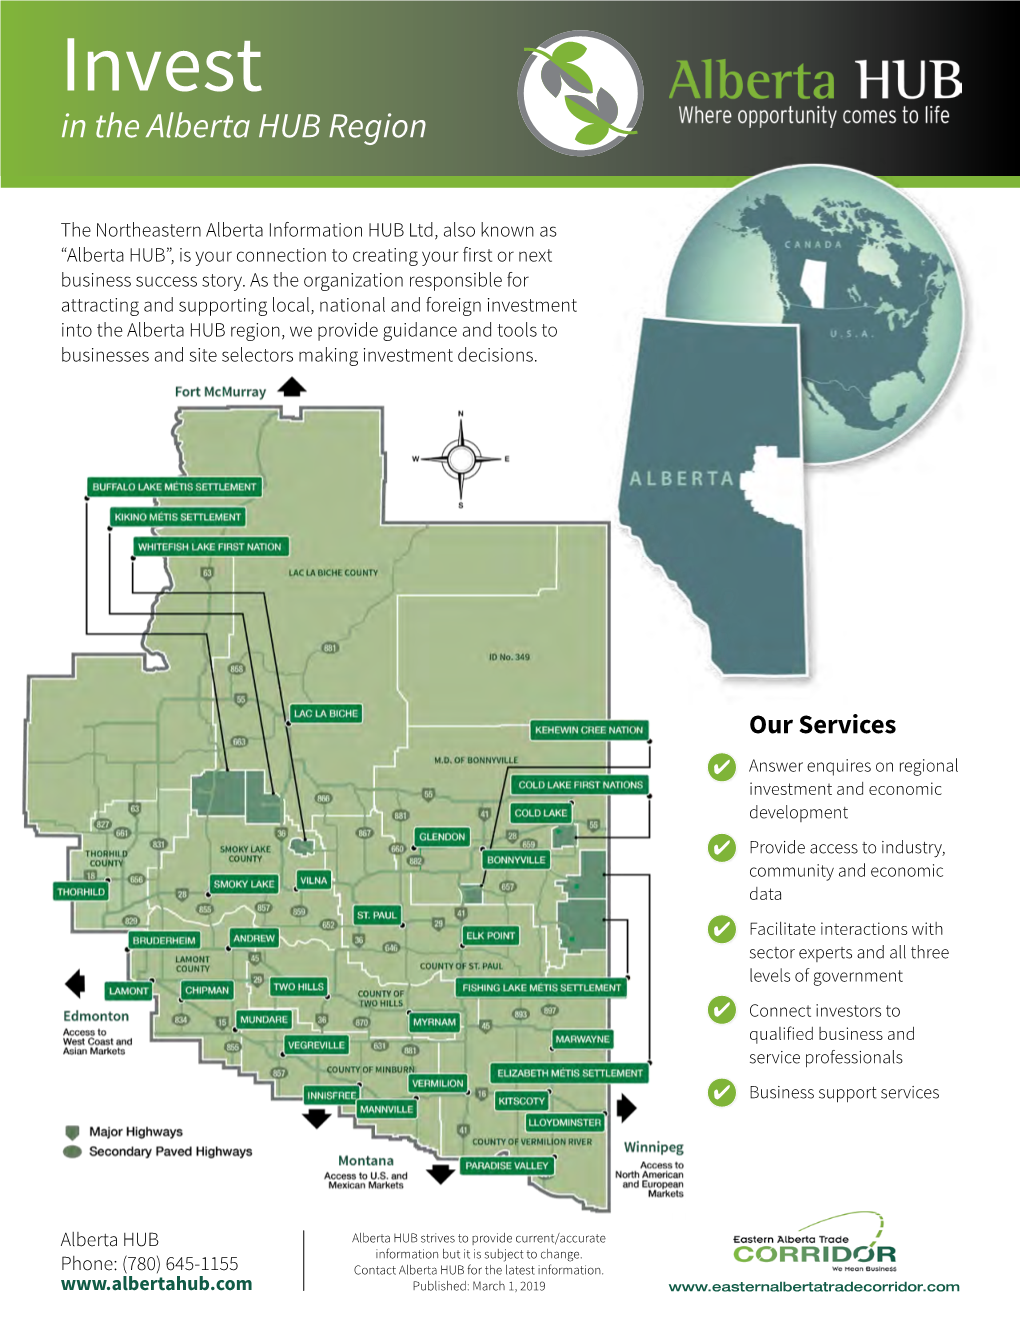 Invest in the Alberta HUB Region